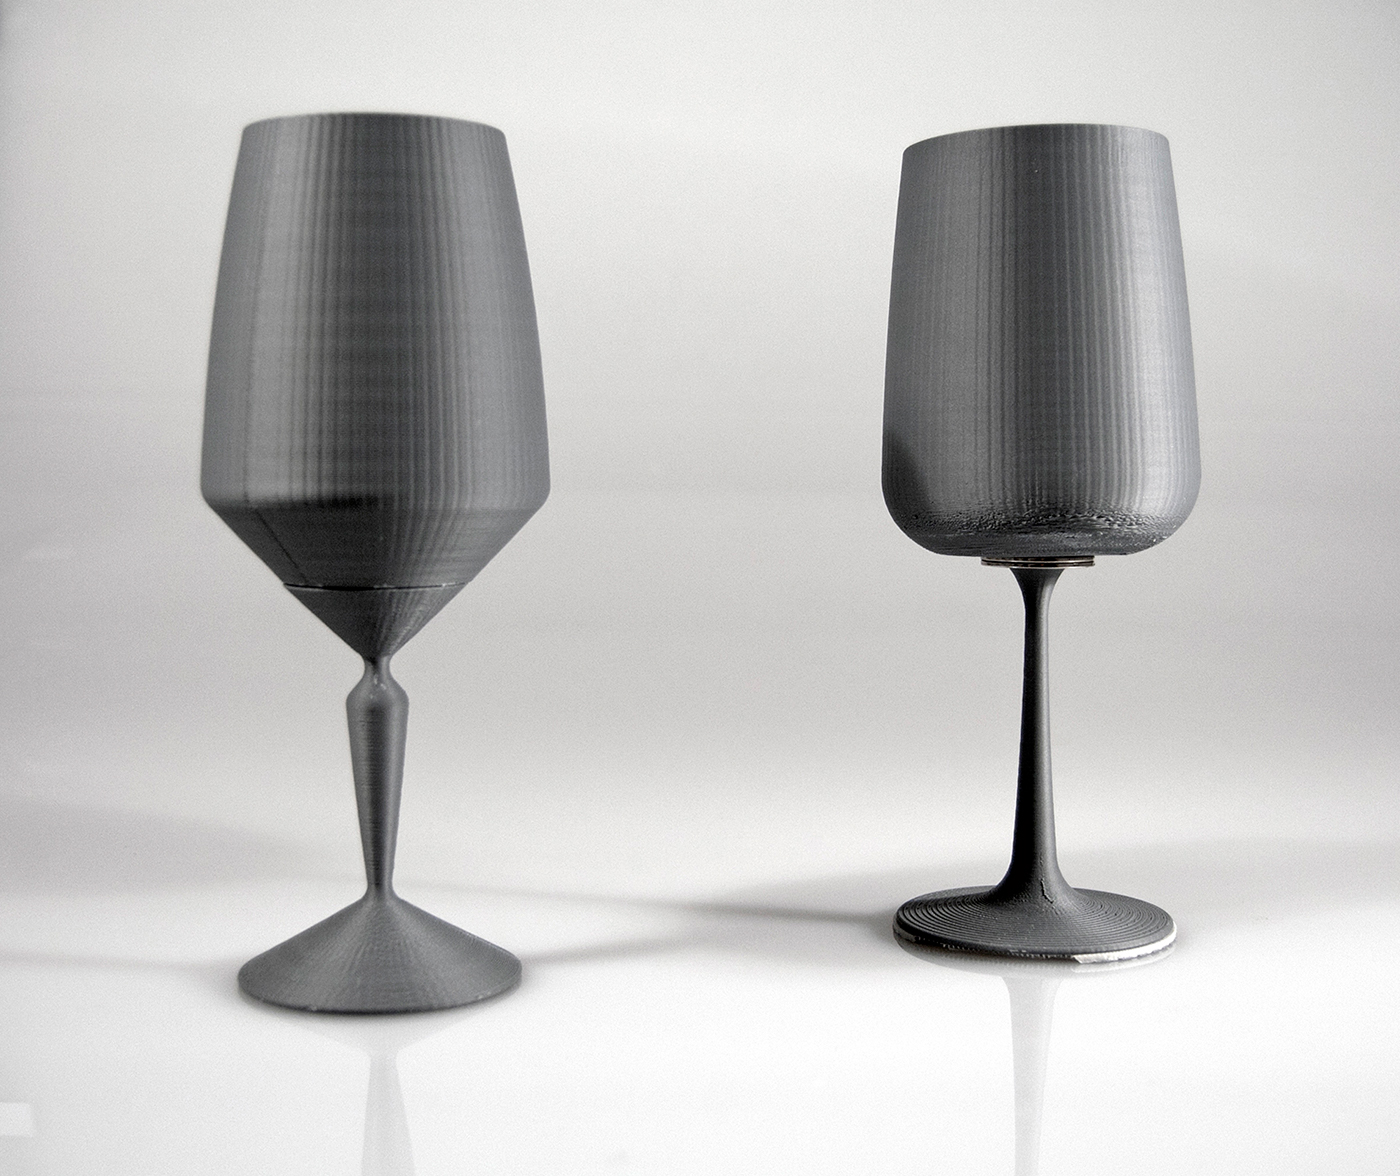 glassware wine glass Drinkware modular Space  Urban drink nest stack